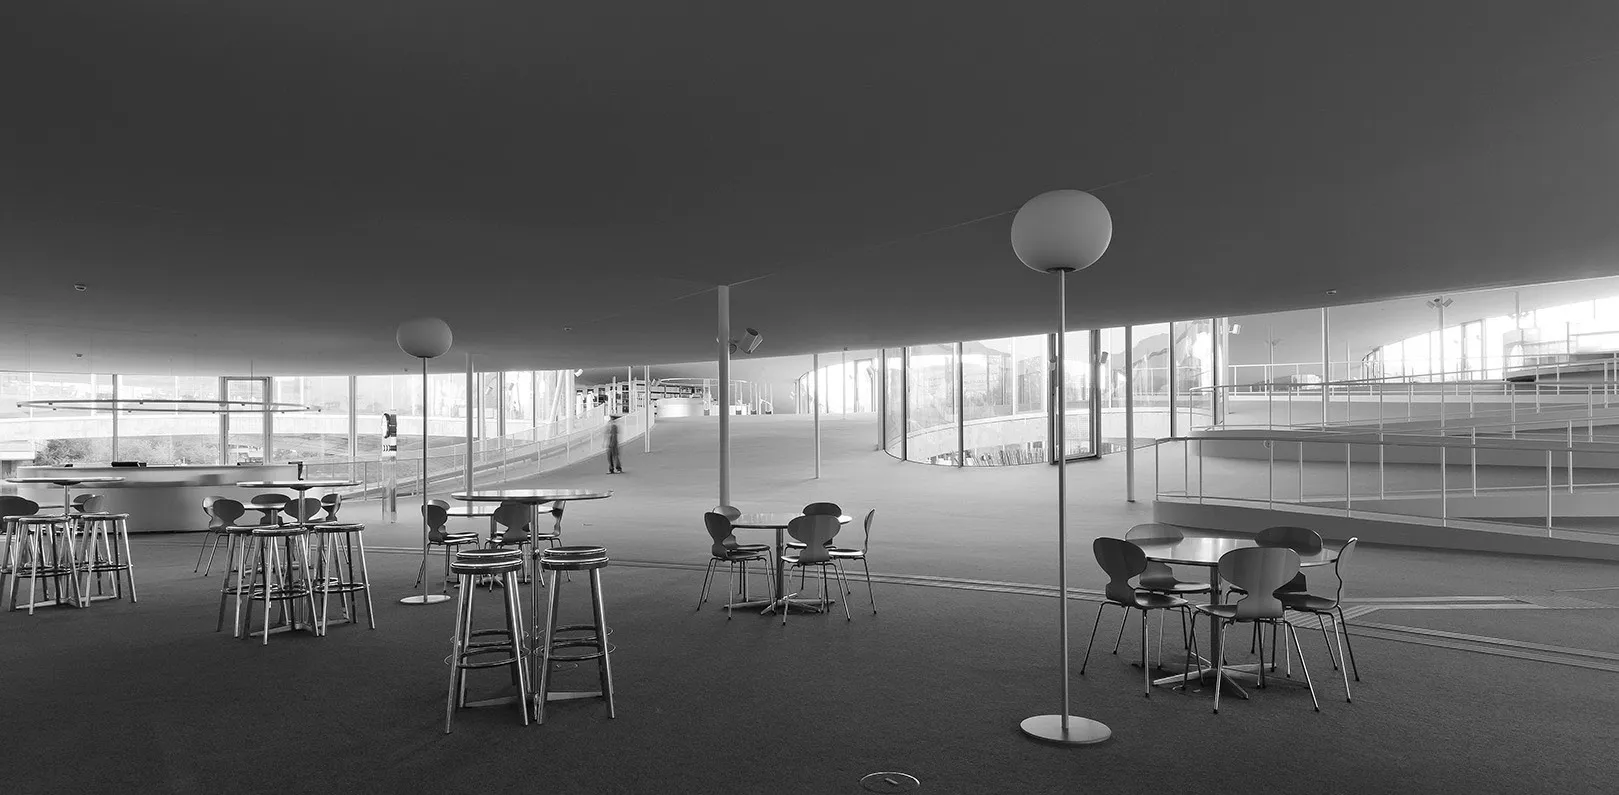 「「ROLEX ラーニング センター」カフェから図書室側を見る」の写真